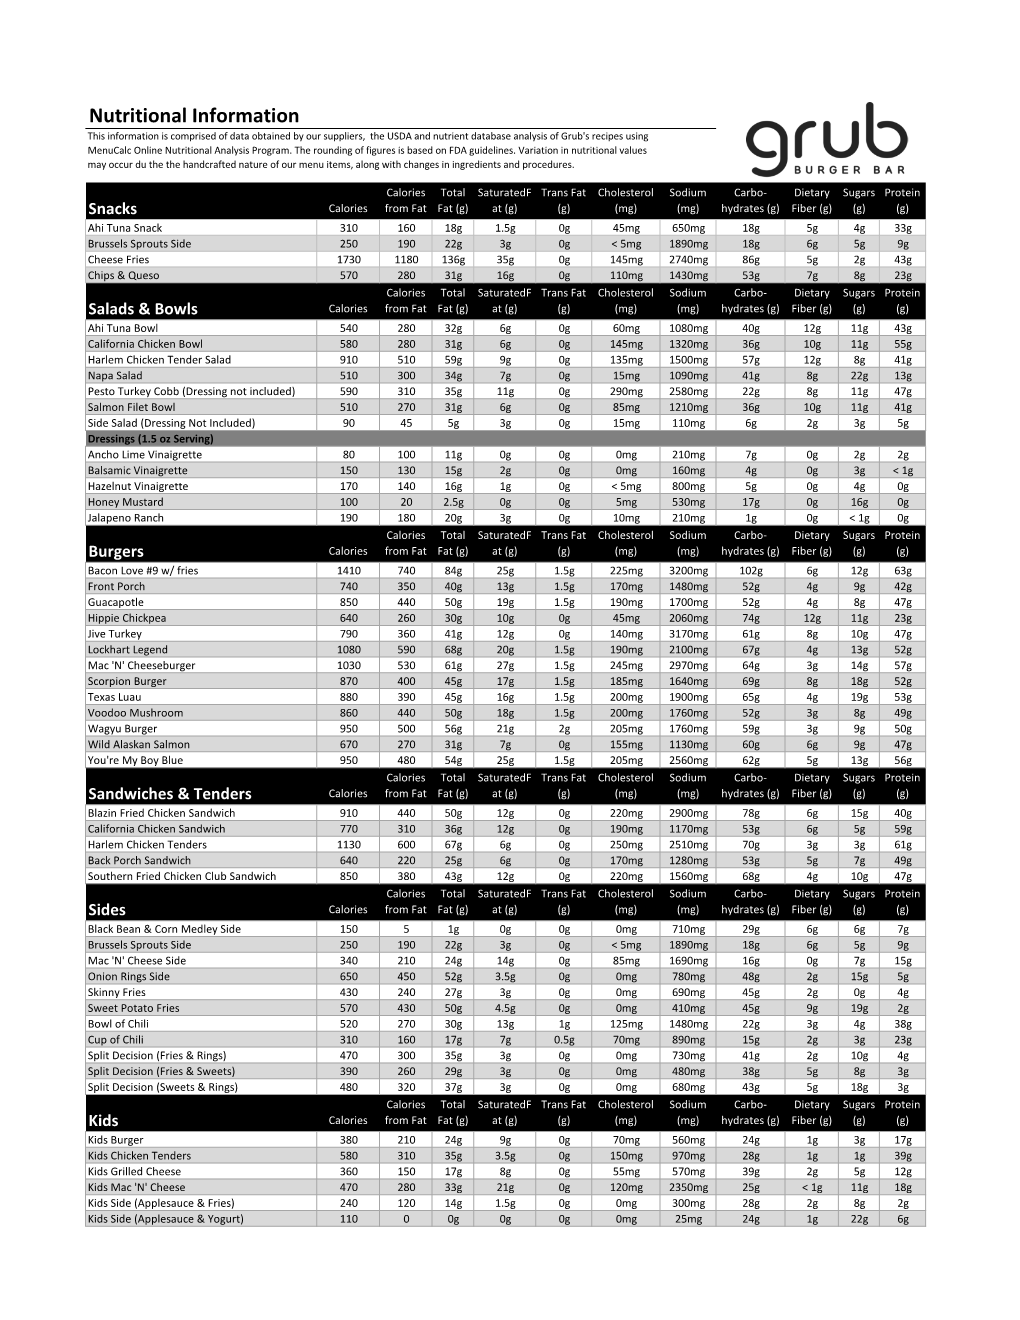 Nutritional Information Sheet – 2019